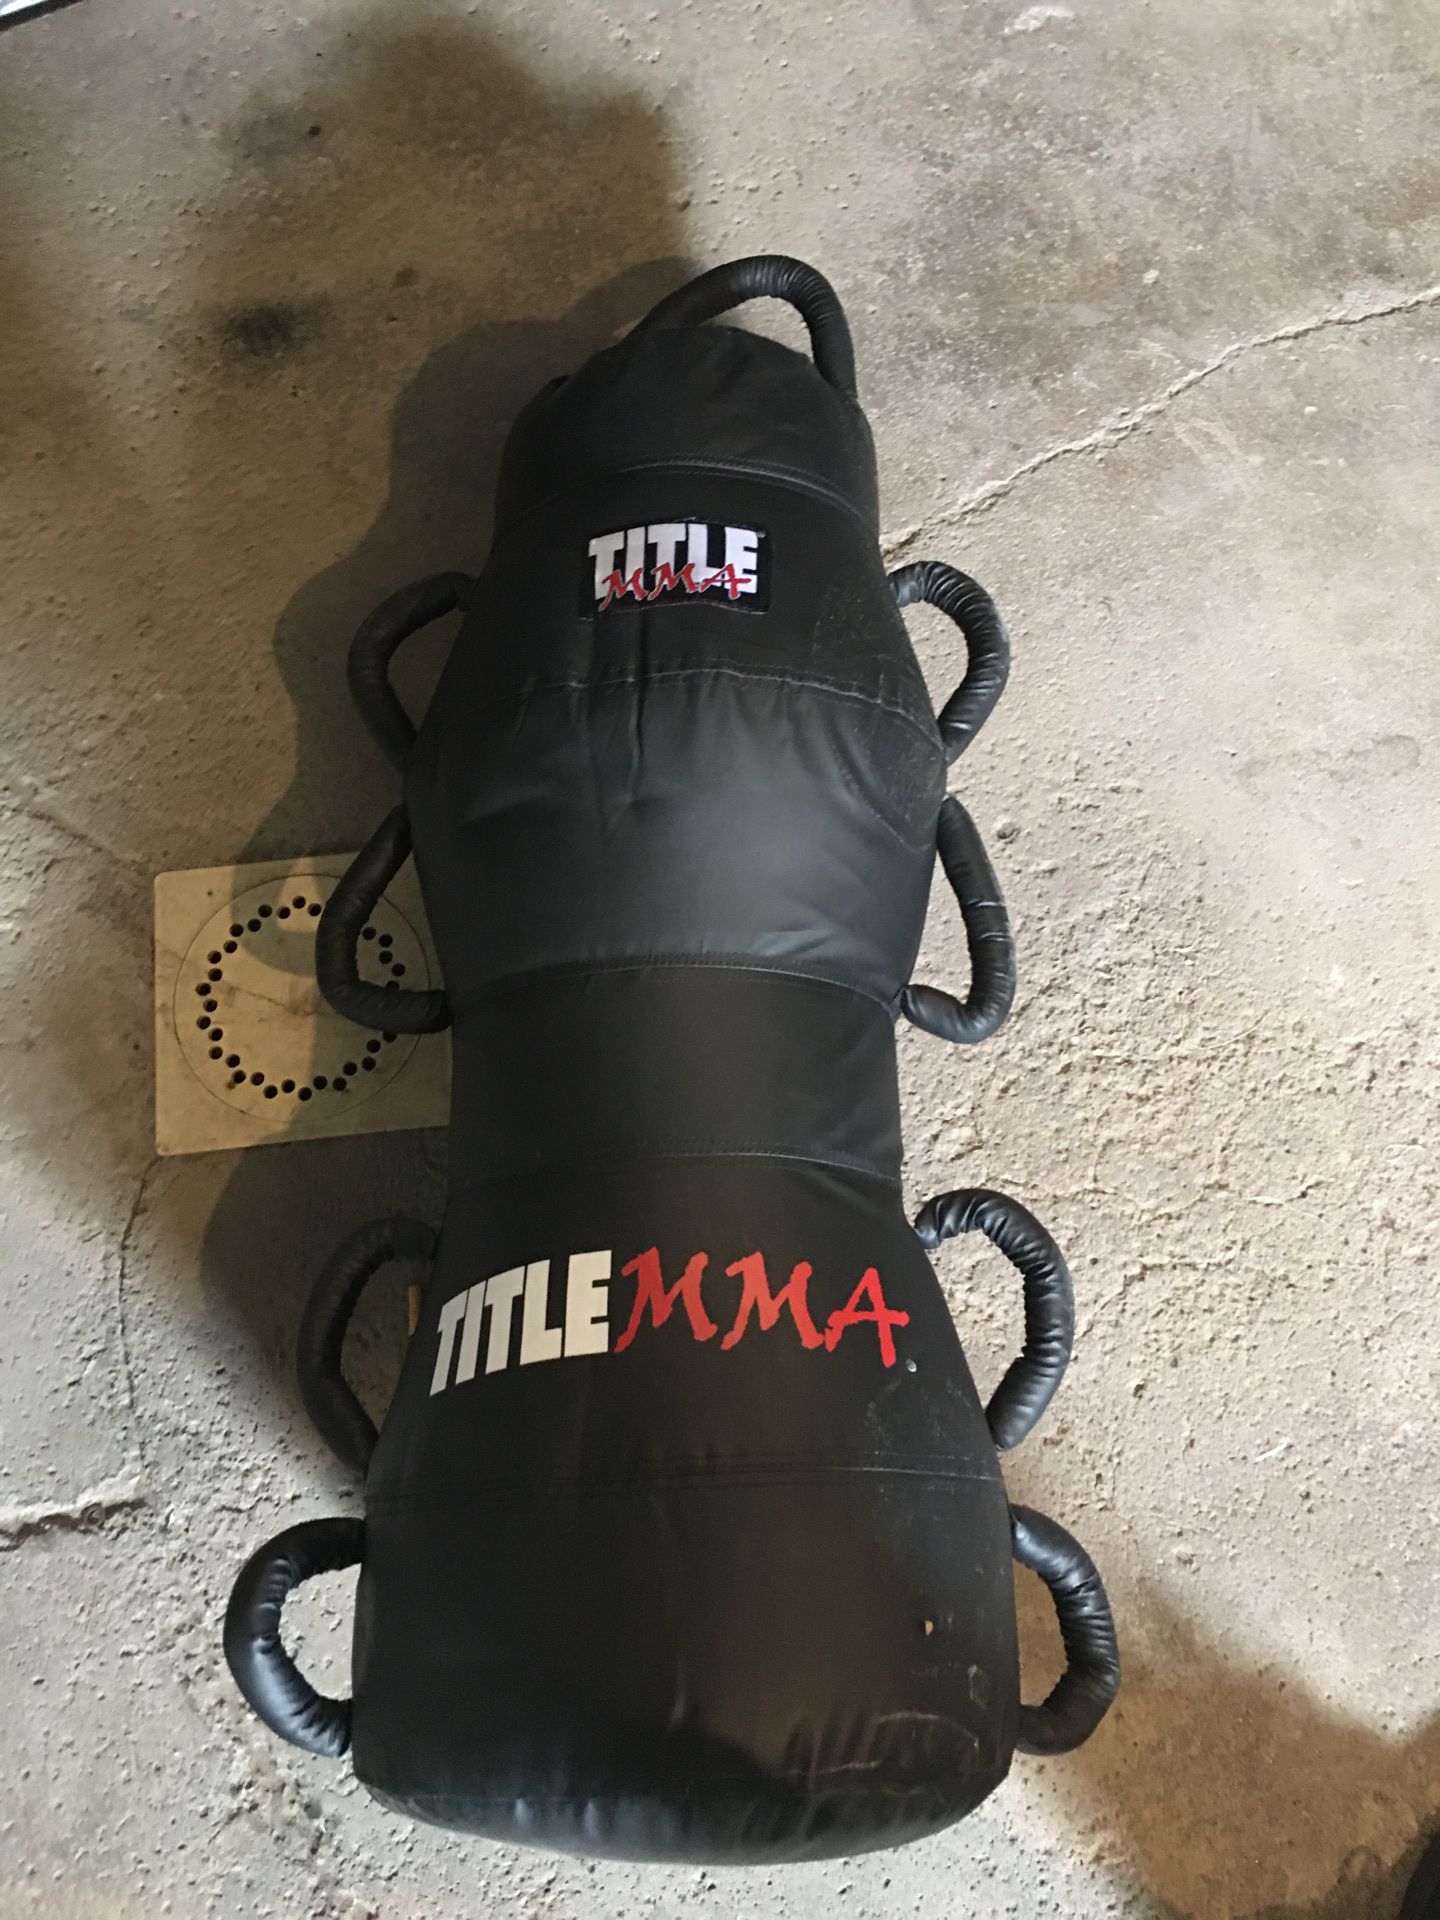 Title MMA punching bag